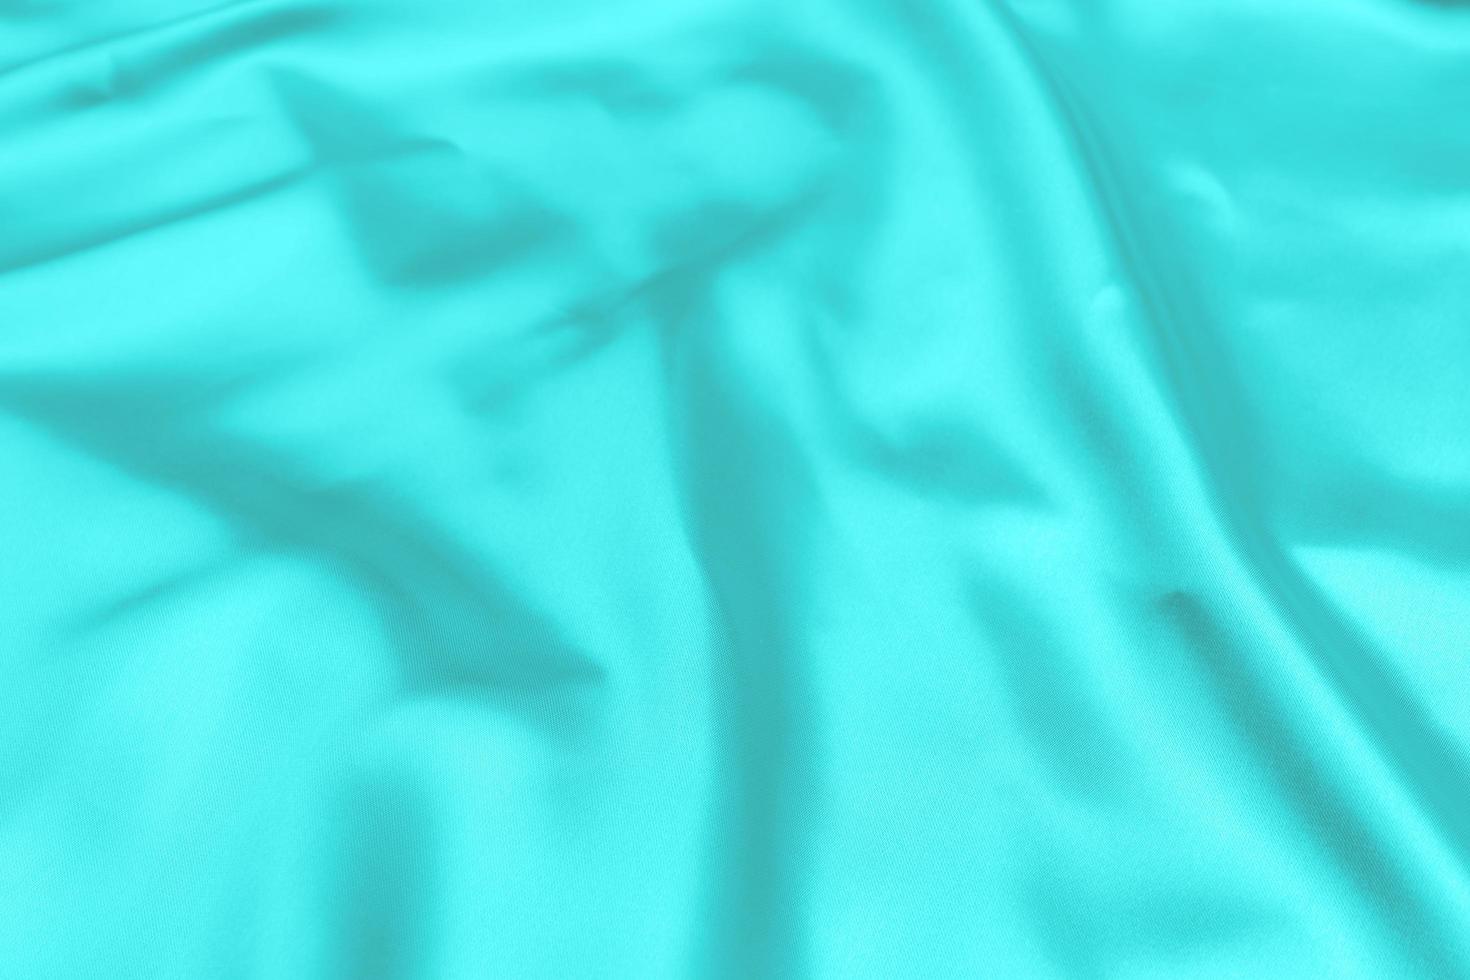 cyan-teal satin tyg textur mjuk oskärpa bakgrund foto